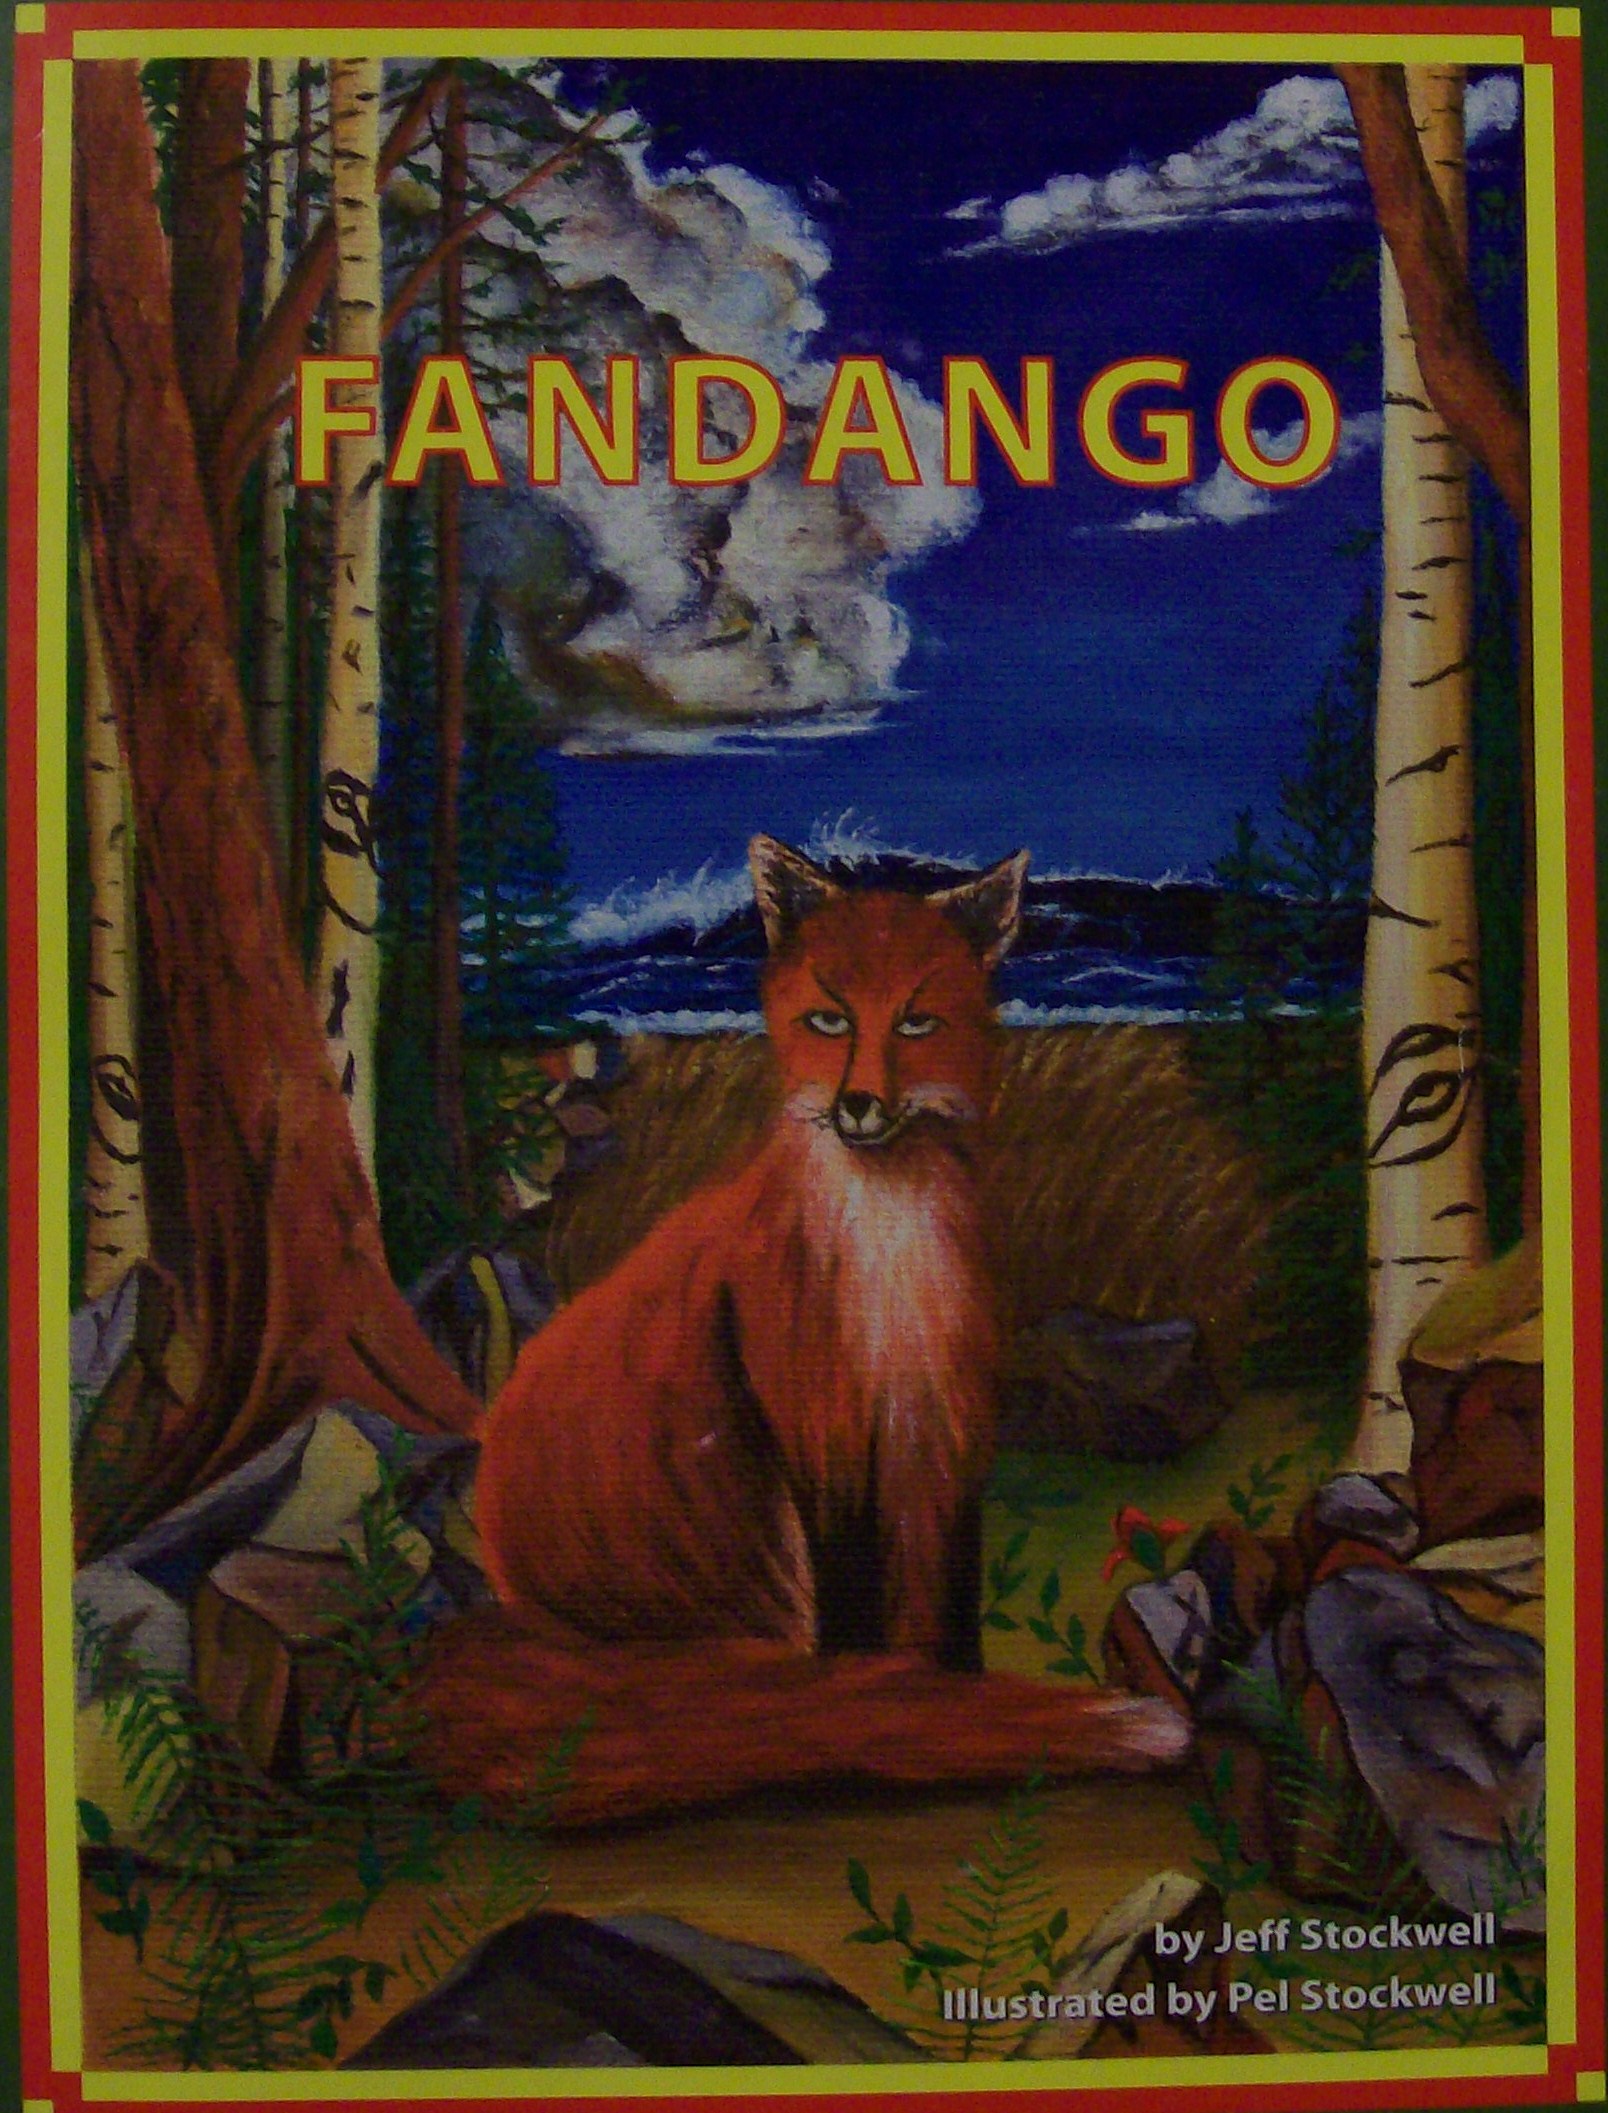 Enter Your Chance to Win the Fandango Armchair Treasure Hunt Book!